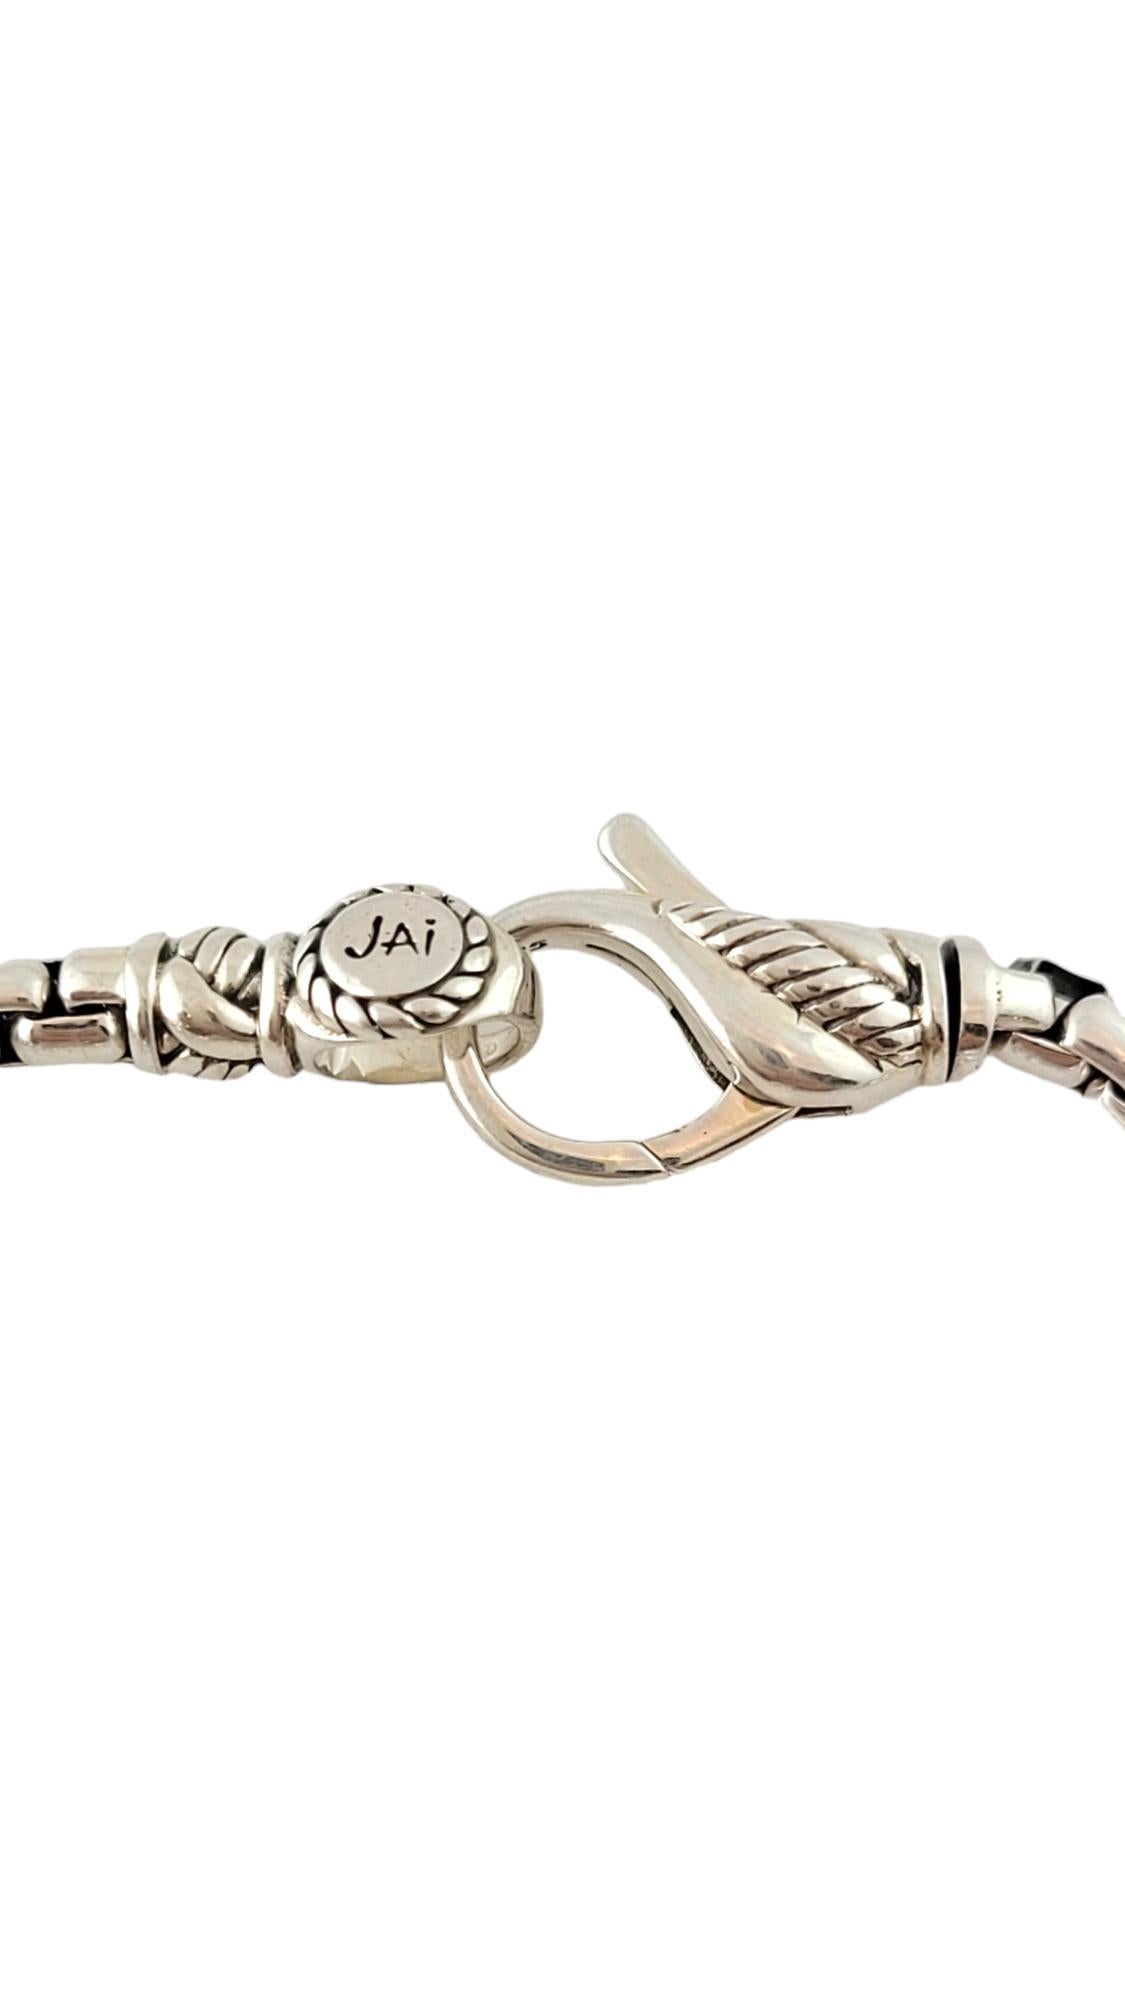 Women's John Hardy JAi Sterling Silver Hammered Bead Box Chain Bracelet #17478 For Sale